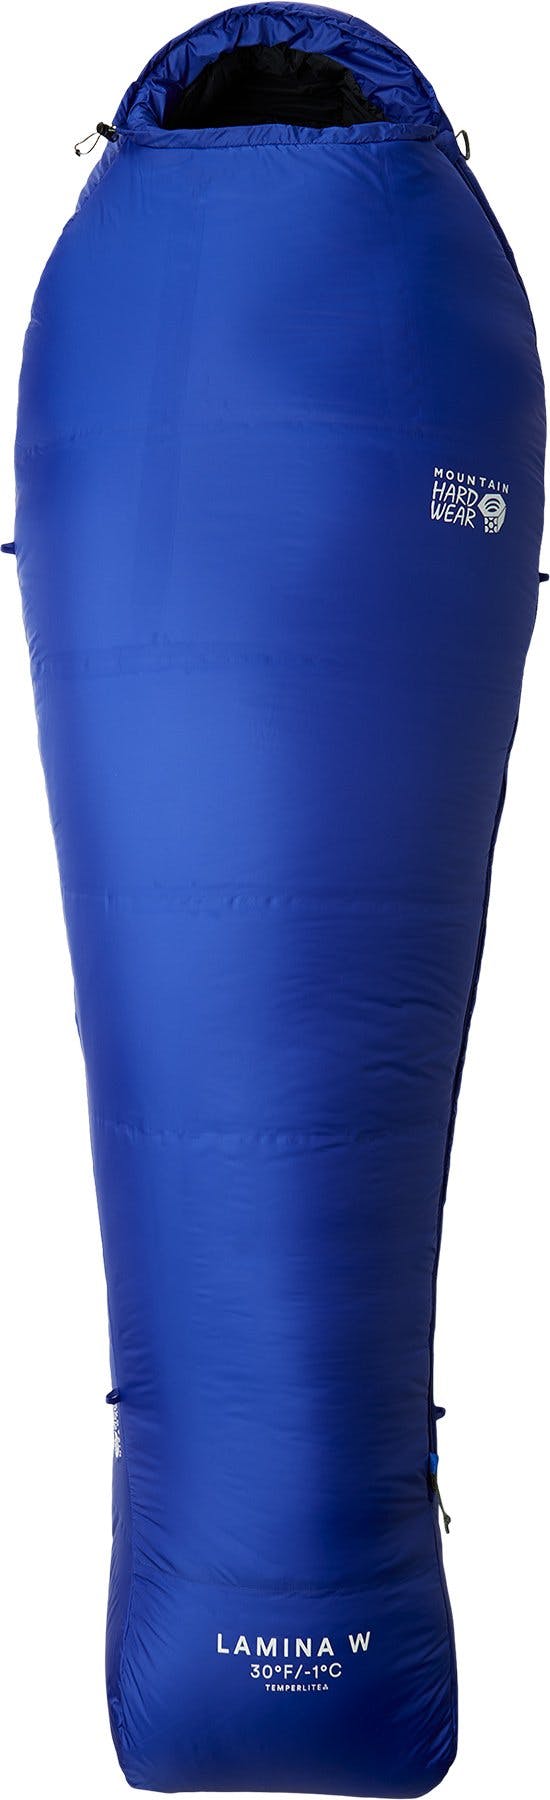 Product image for Lamina Sleeping Bag 30°F/-1°C - Regular - Women's